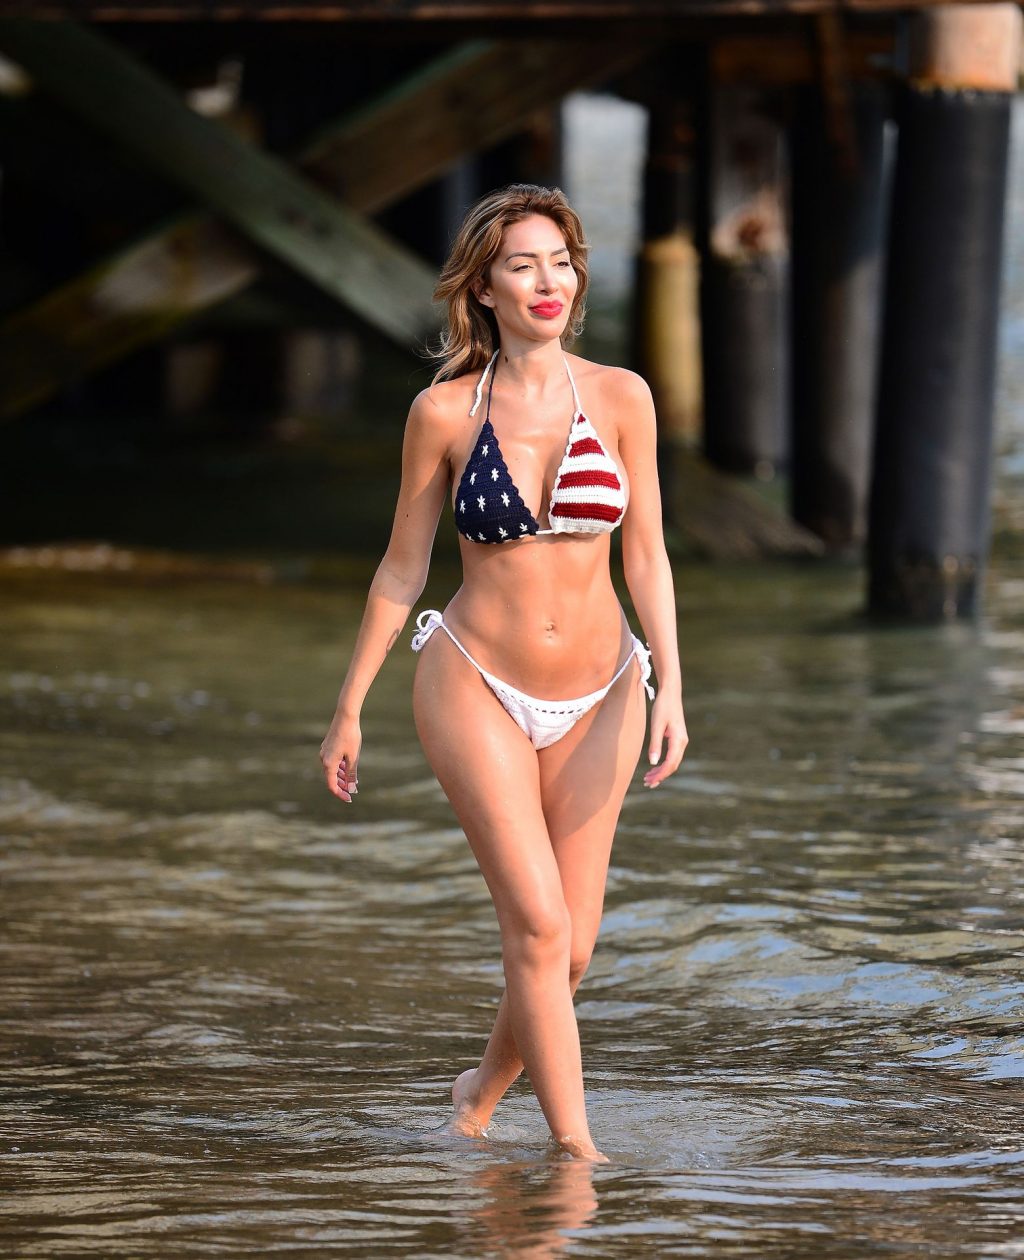 Farrah Abraham Shows Off Her Amazing Body in a Skimpy Patriotic Bikini (45 Photos)